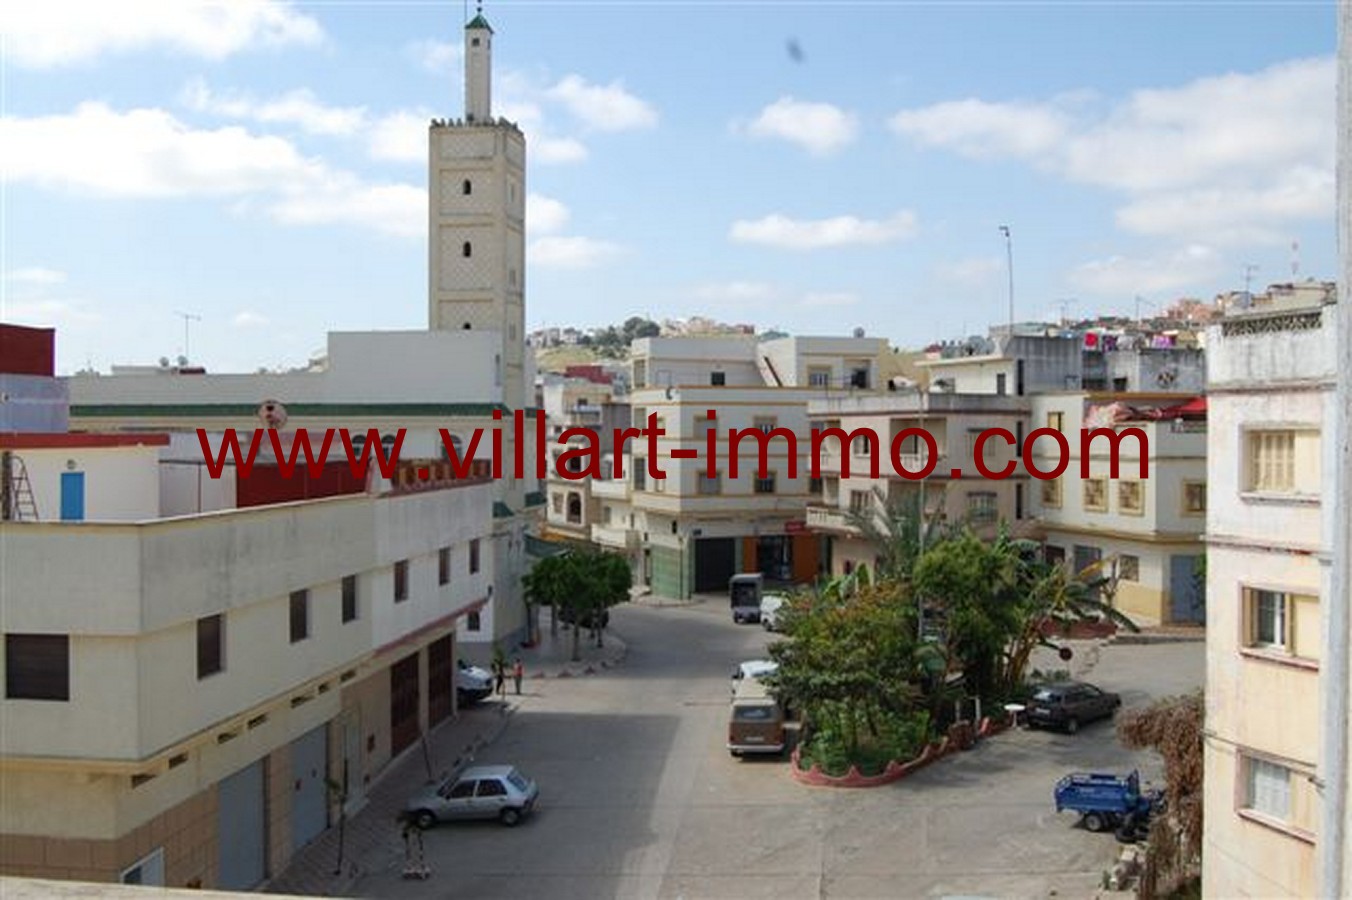 1-Vente-Appartement-Tanger-Vue-VA532-Jirari-Villart Immo